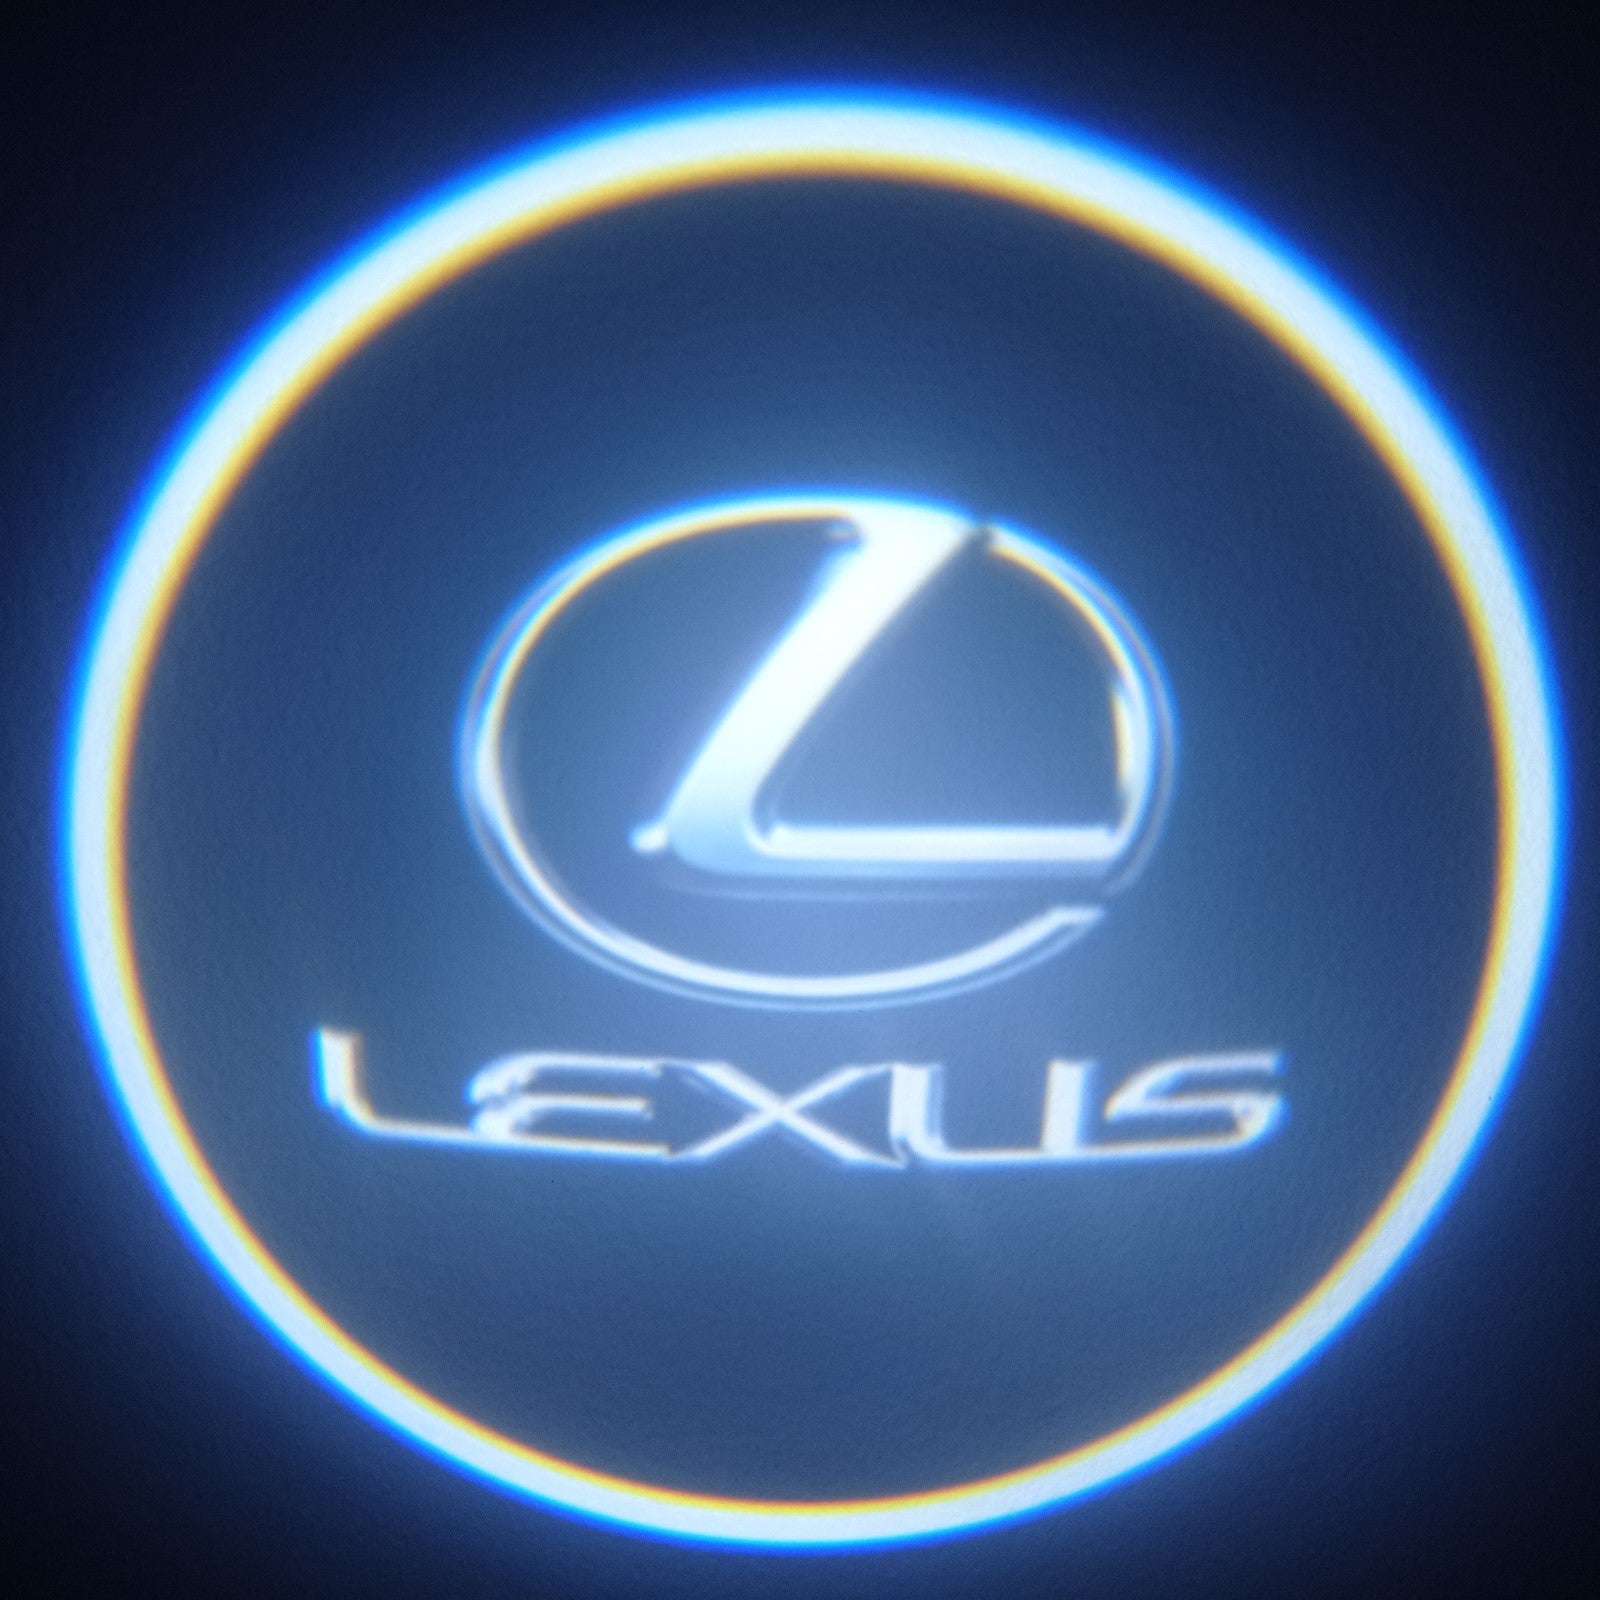 Luzes Cortesia com Logotipo marca Lexus